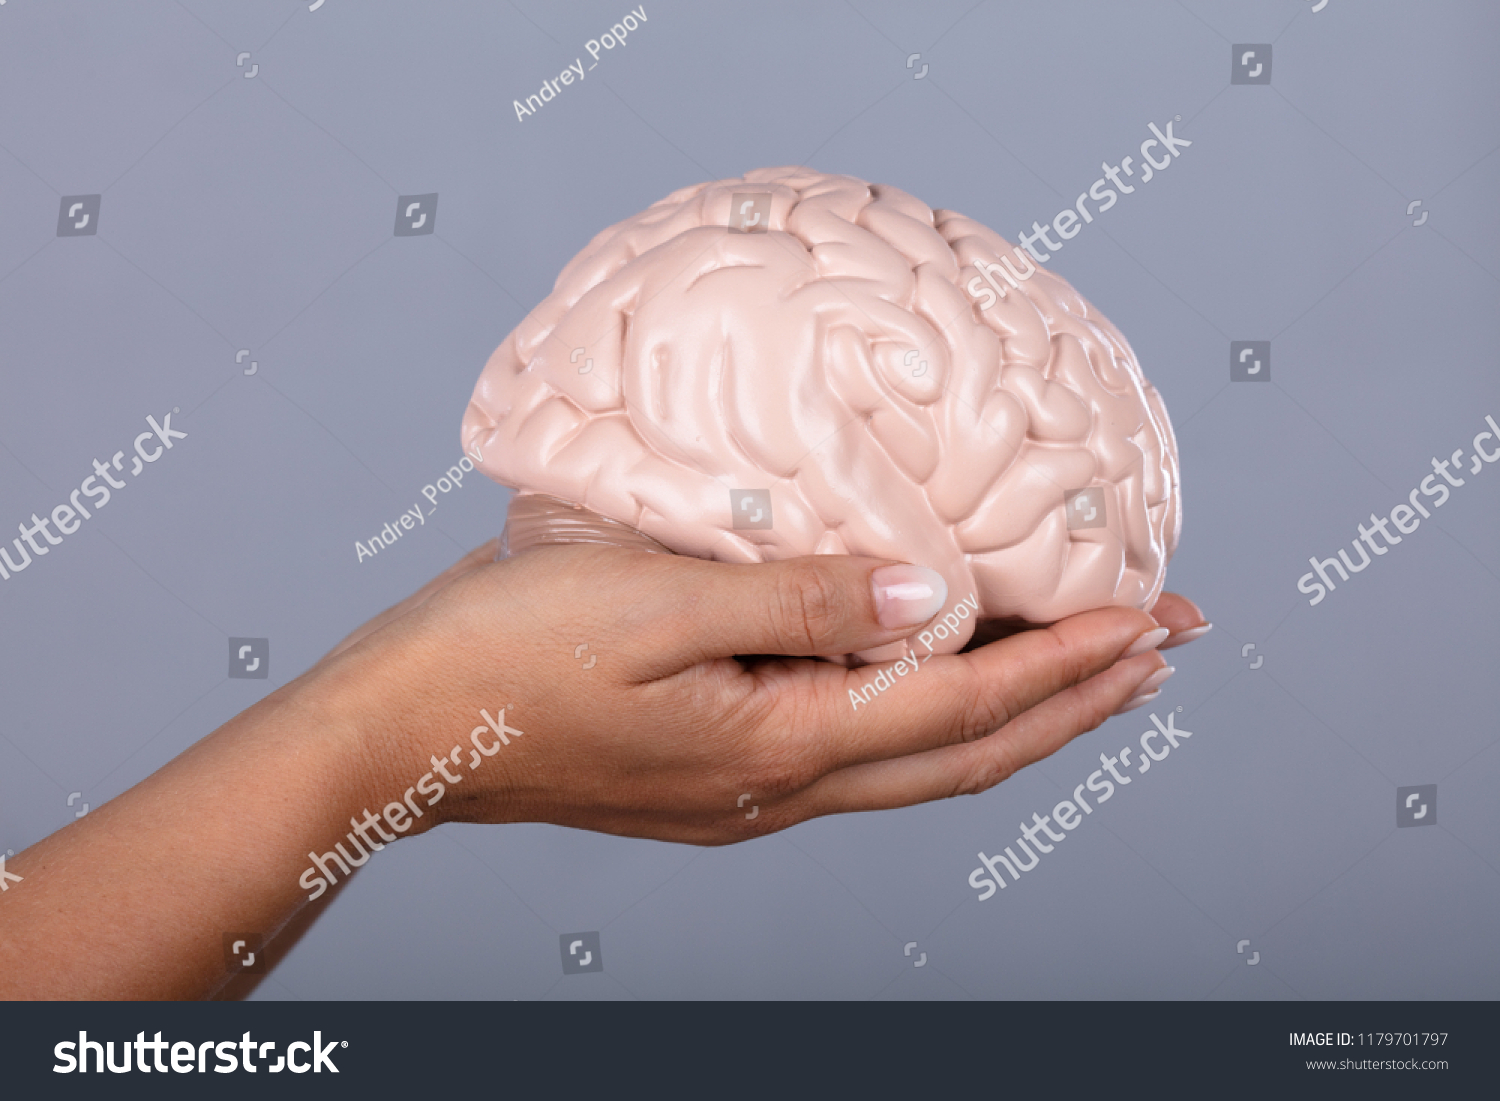 Human Hand Holding Human Brain Model Against Grey Background #1179701797